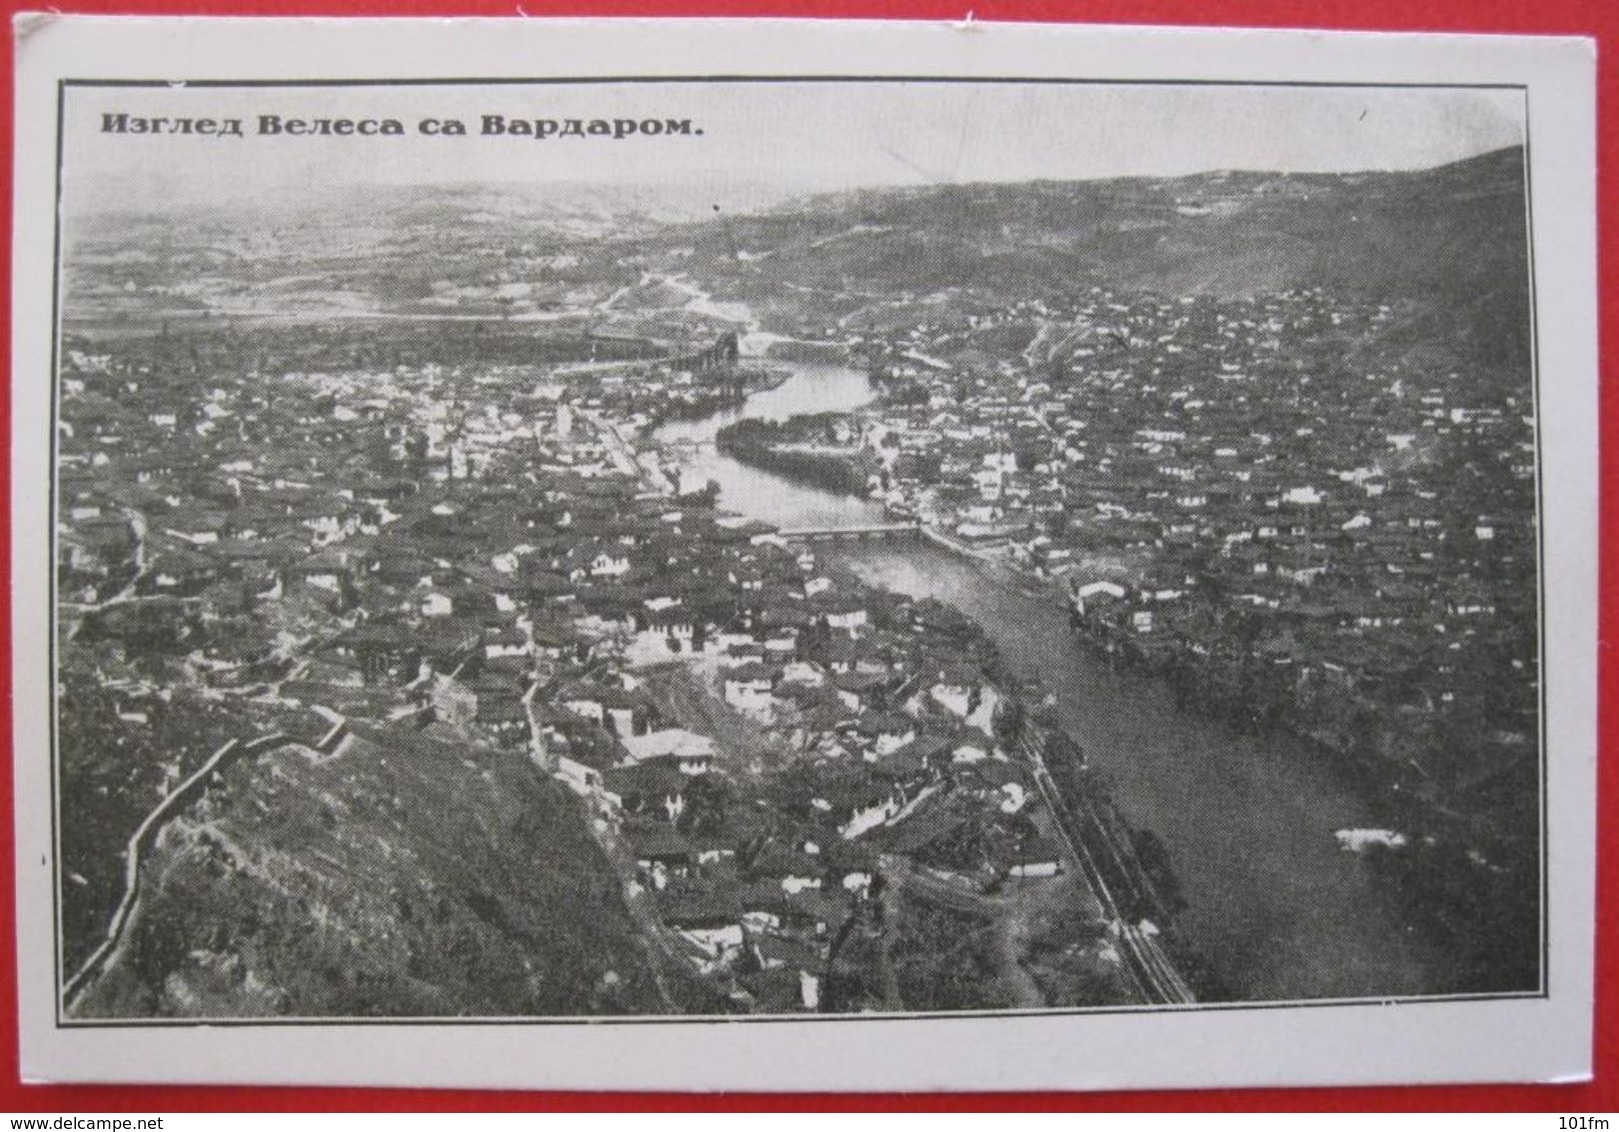 MACEDONIA - IZGLED VELESA SA VARDAROM - Macédoine Du Nord